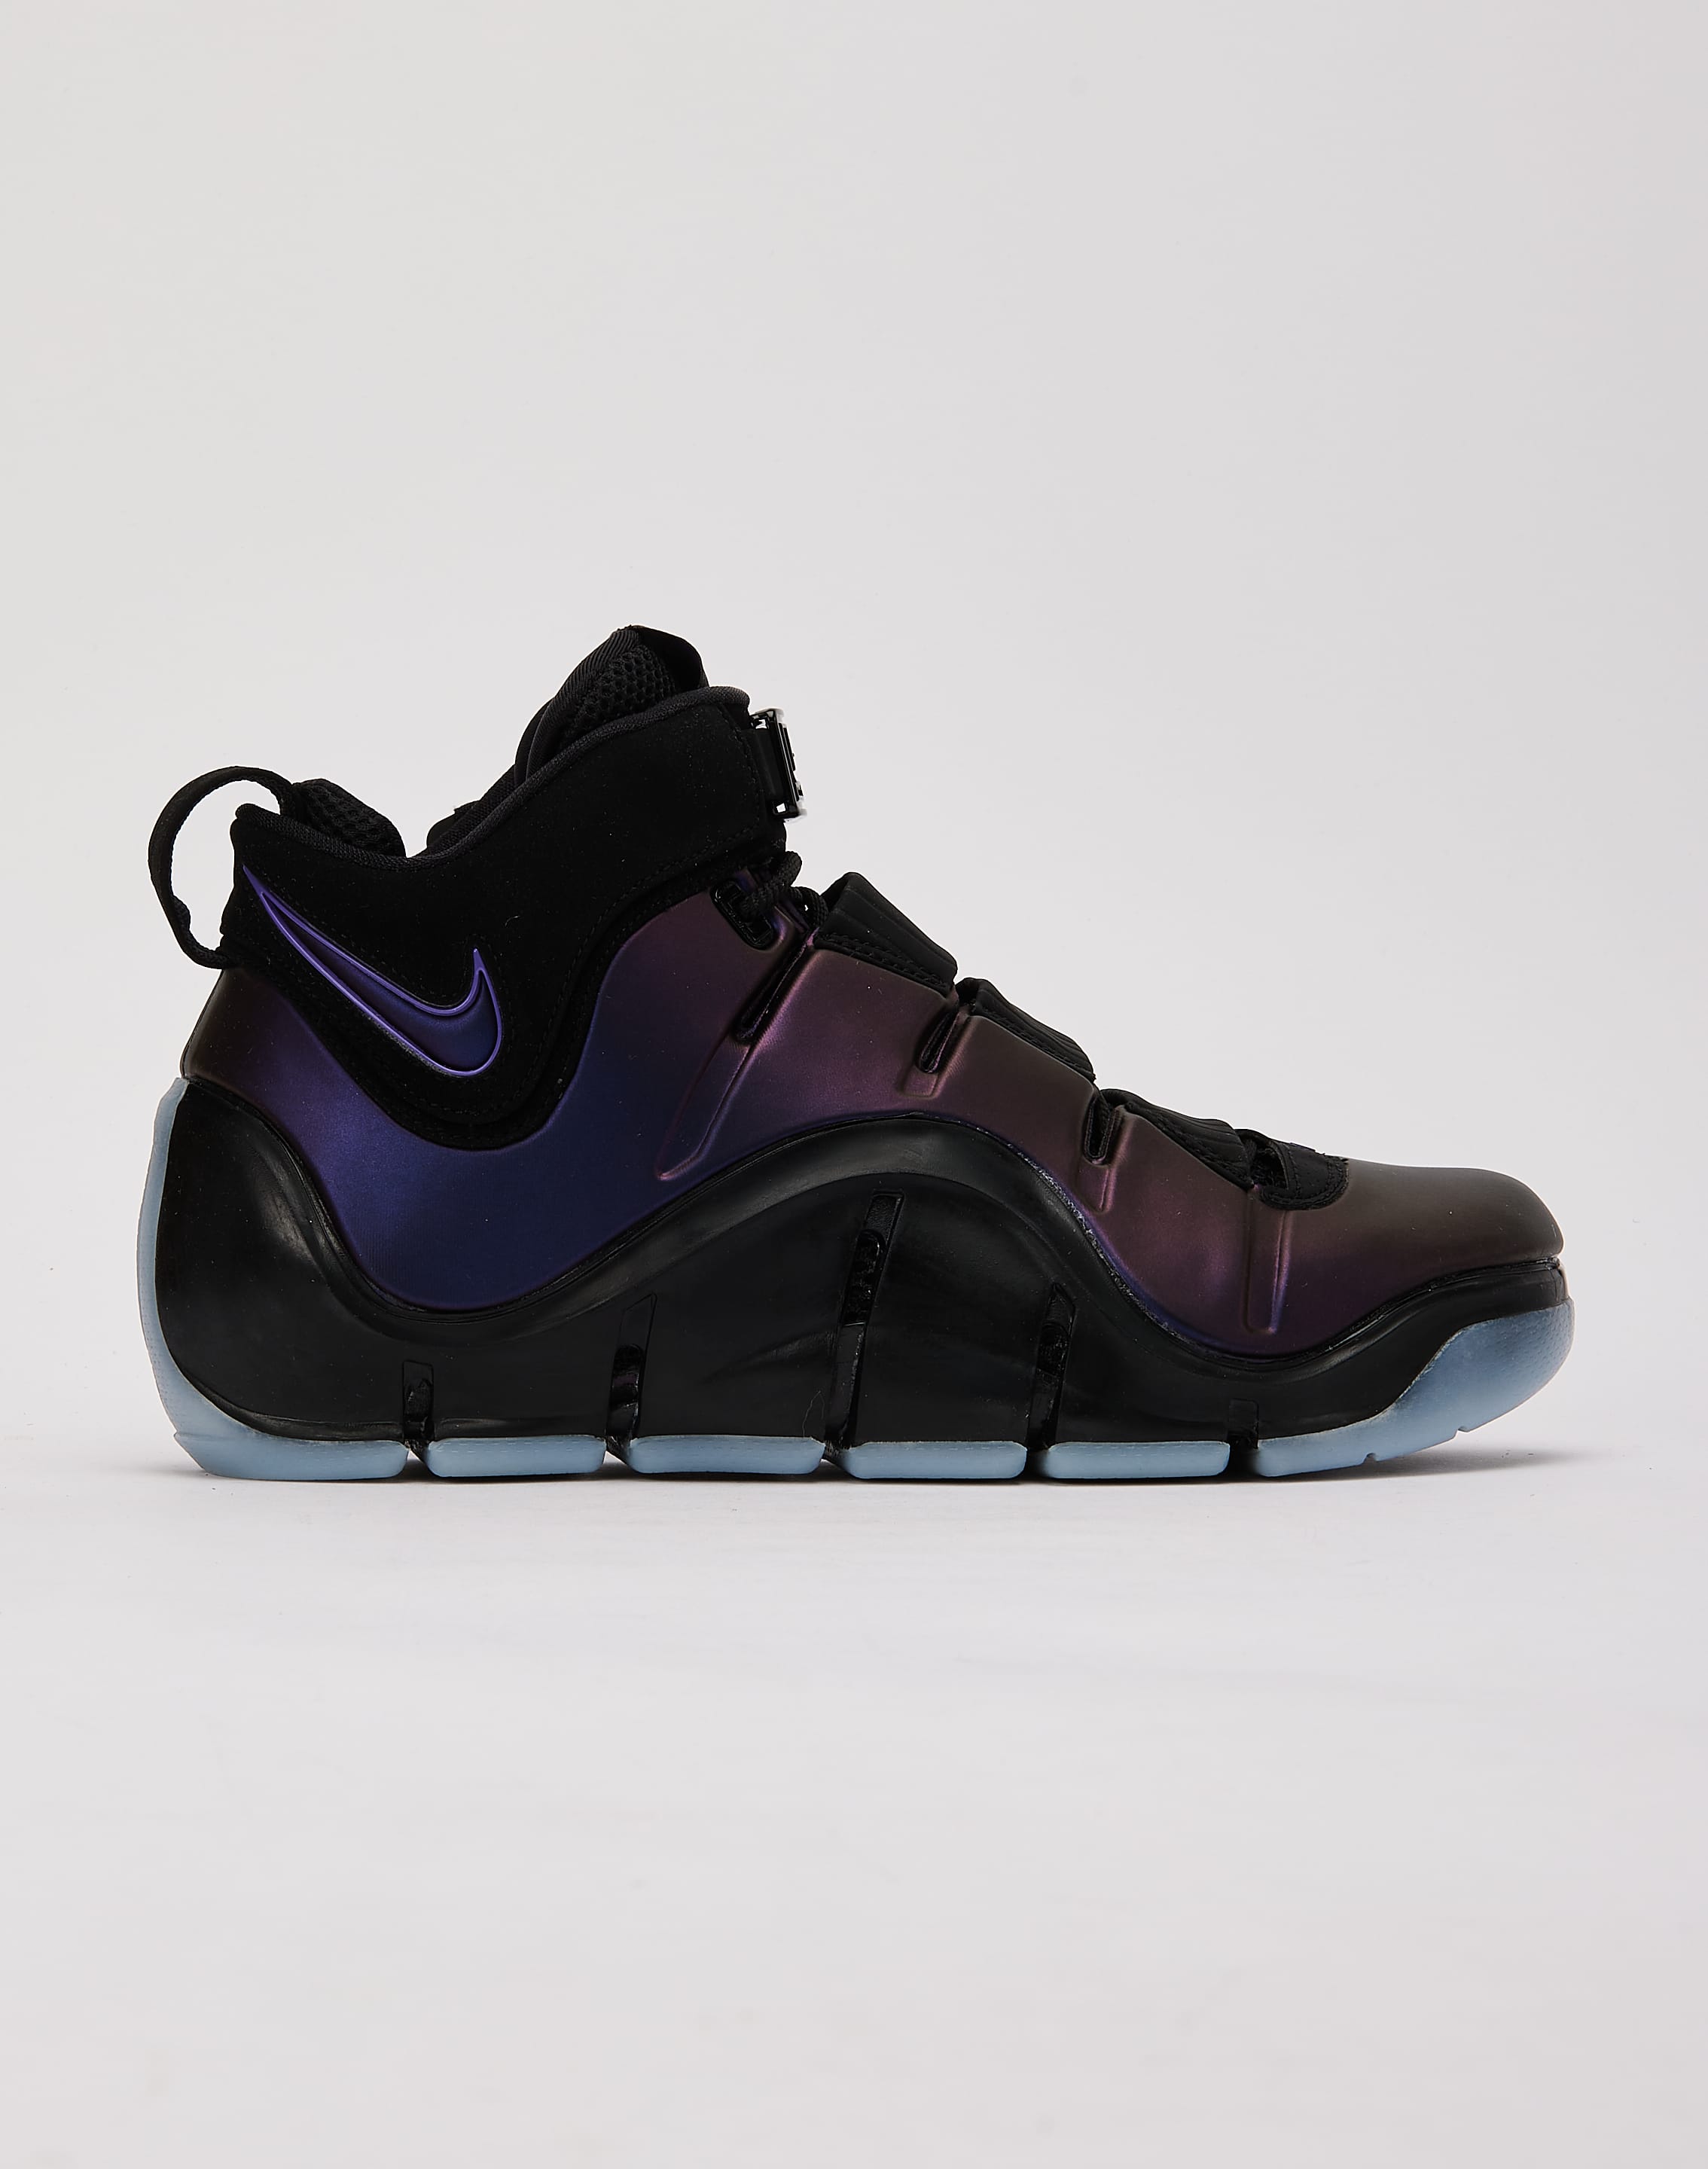 Nike LeBron 4 'Black And Varsity Purple'